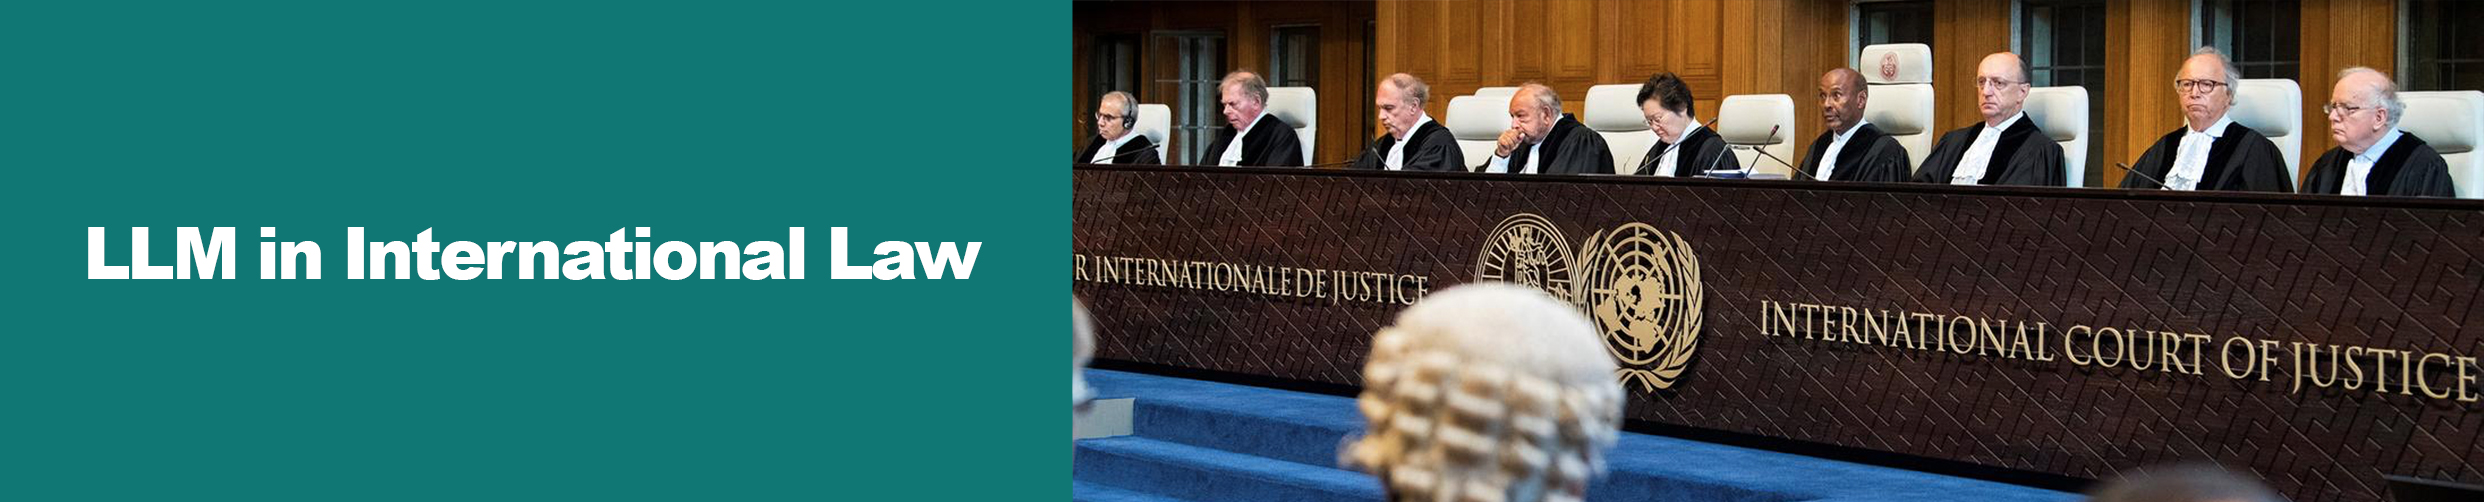 Master of Laws (LLM) in International Law